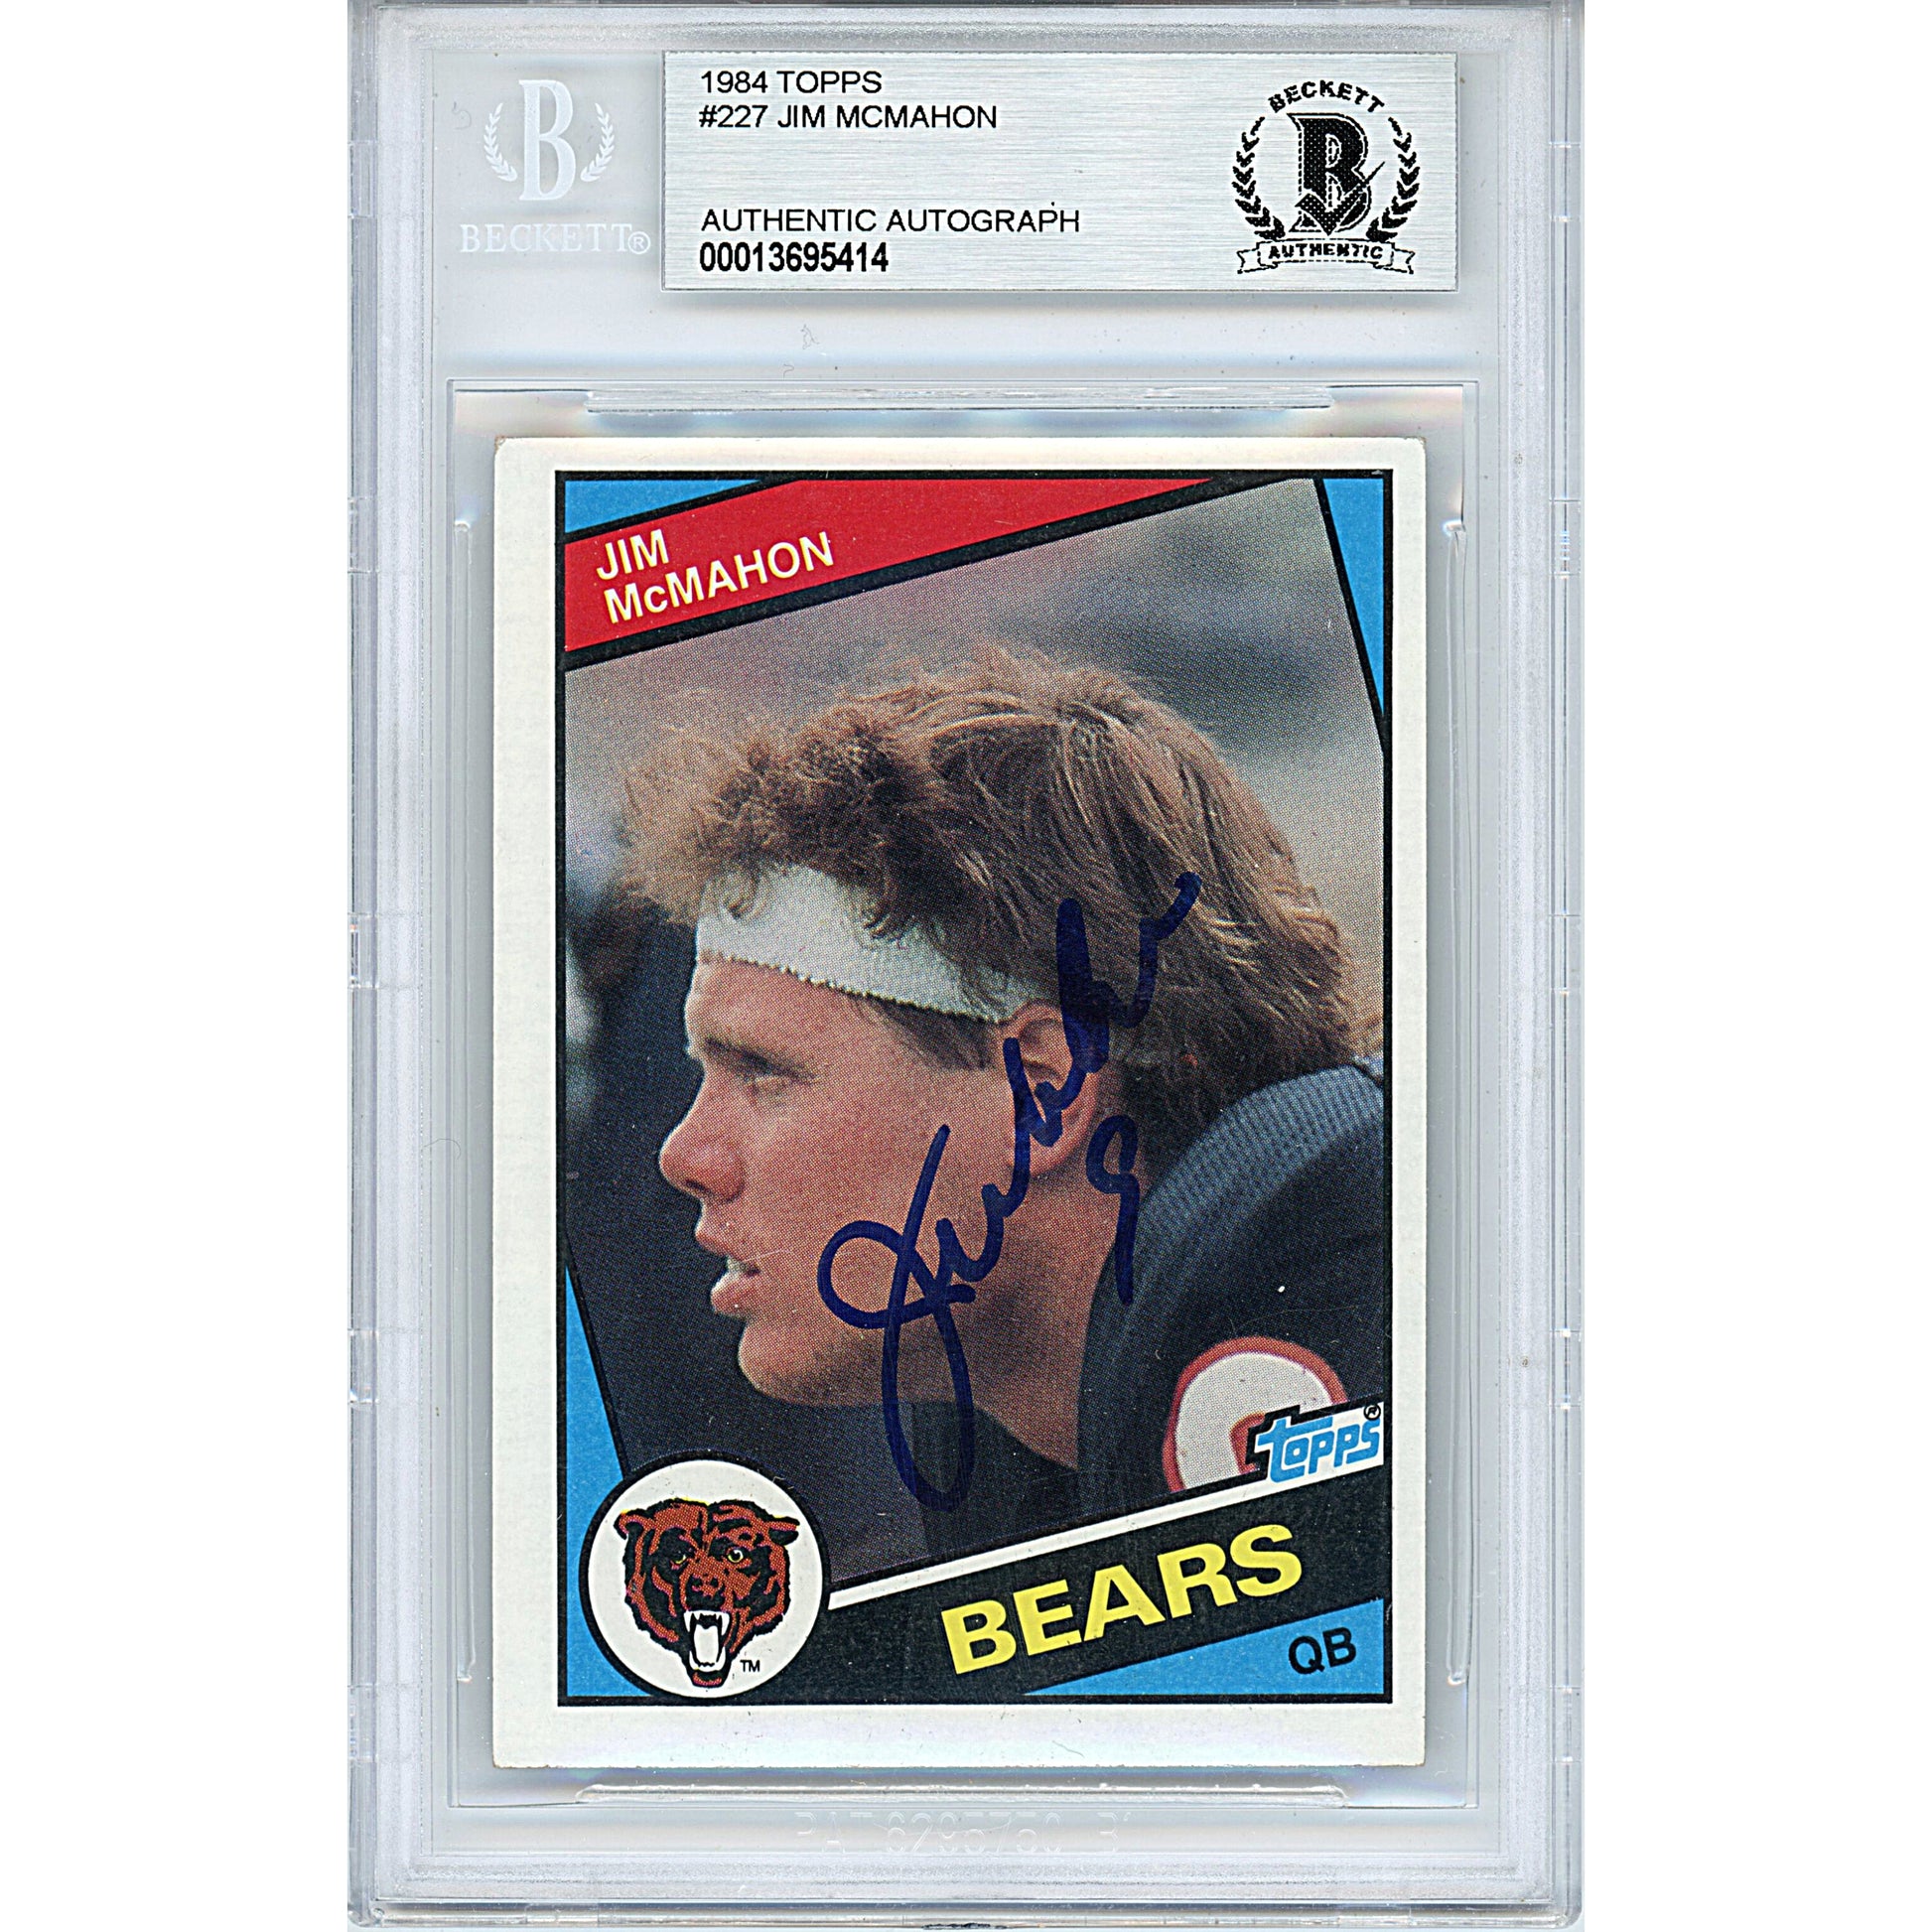 Footballs- Autographed- Jim McMahon Signed Chicago Bears 1984 Topps Football Card Beckett BAS Slabbed 00013695414 - 101